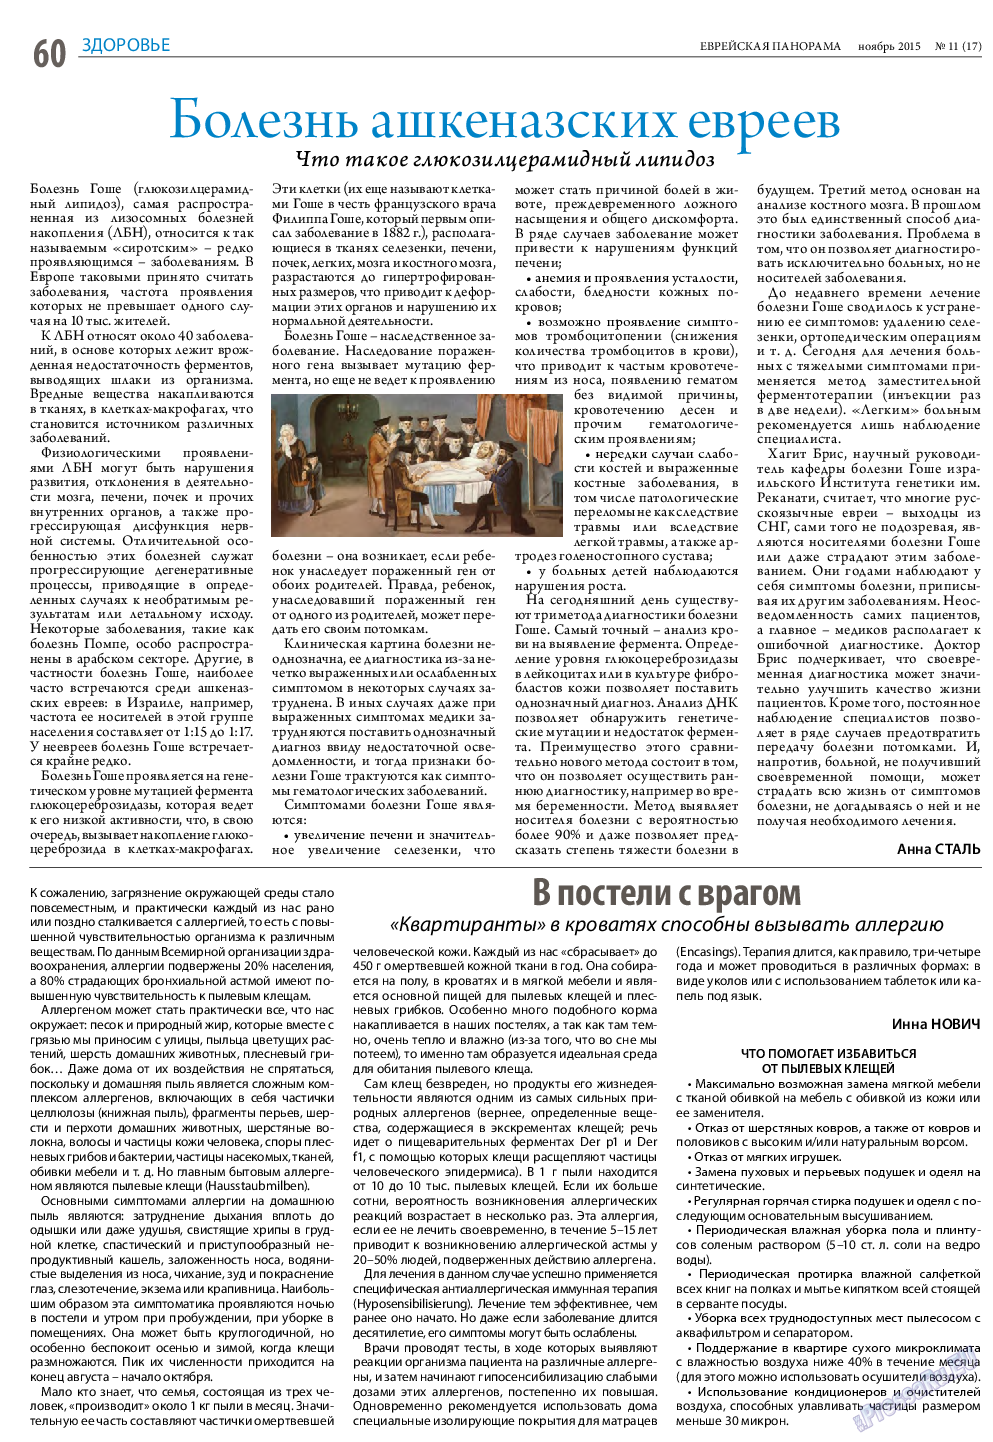 Еврейская панорама, газета. 2015 №11 стр.60